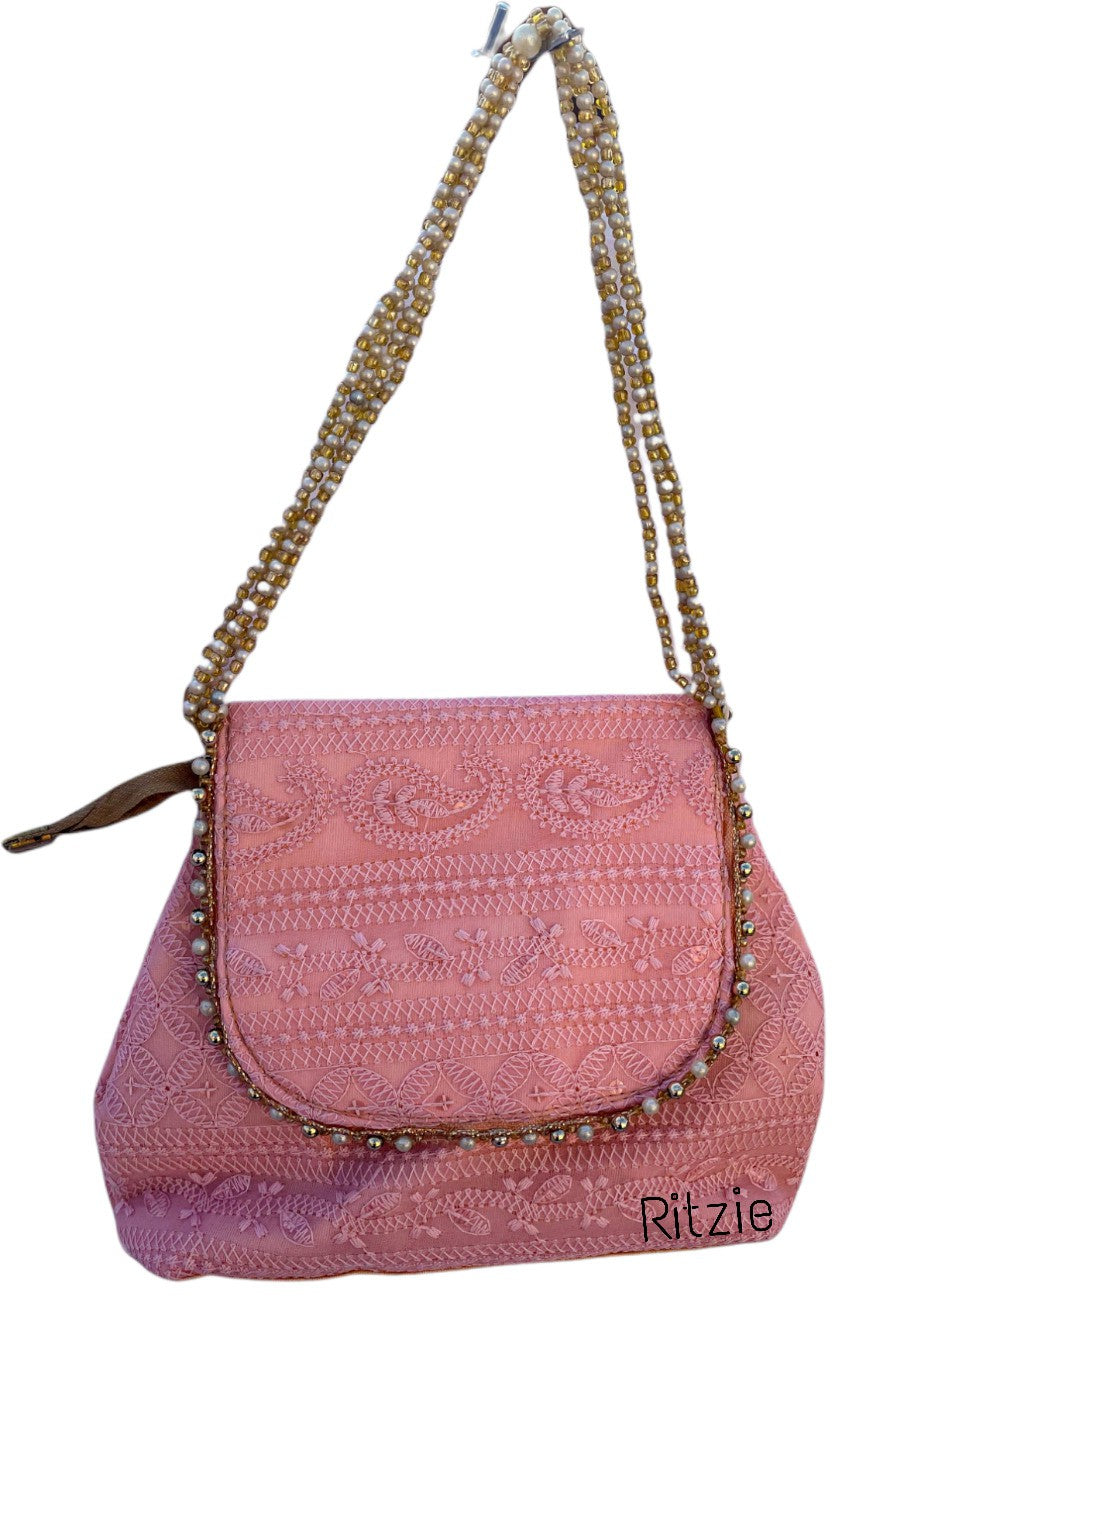 Women's Chickenkari Embroidered Moti Design Flip Handbag    - Ritzie